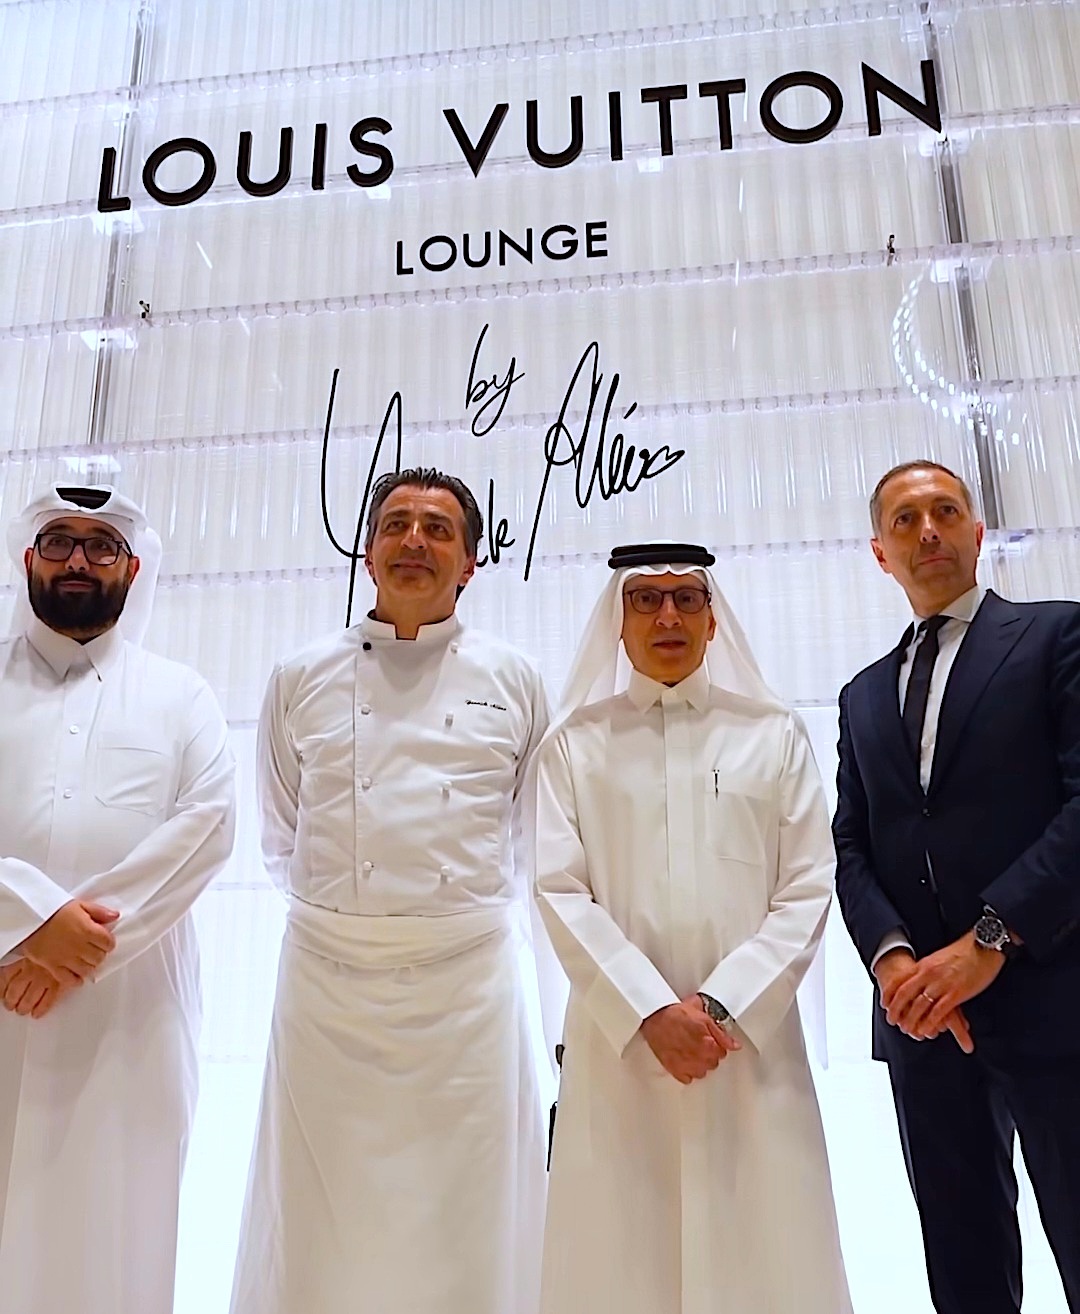 Louis Vuitton Lounge